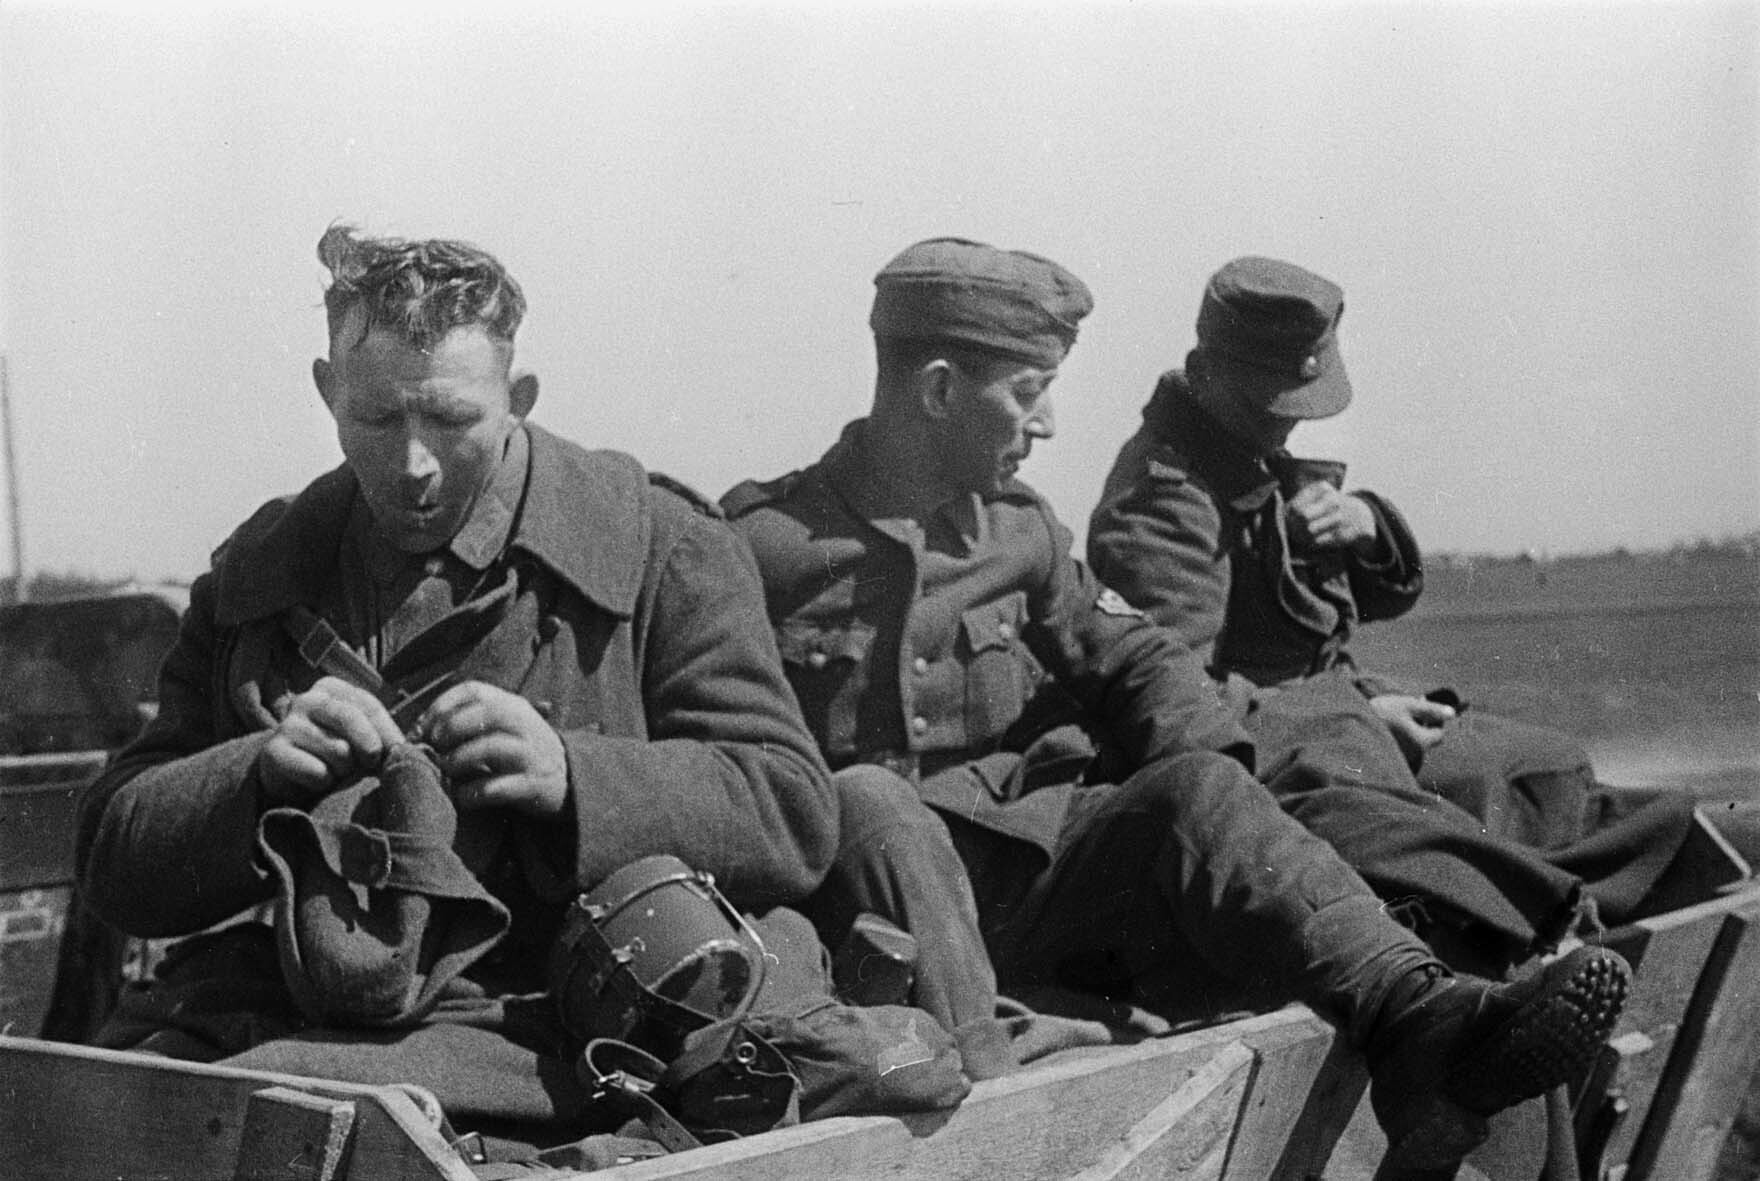 Fotografie: Drei kriegsgefangene Wehrmachtsoldaten, Lettland, 9. Mai 1945 (Museum Berlin-Karlshorst RR-P)